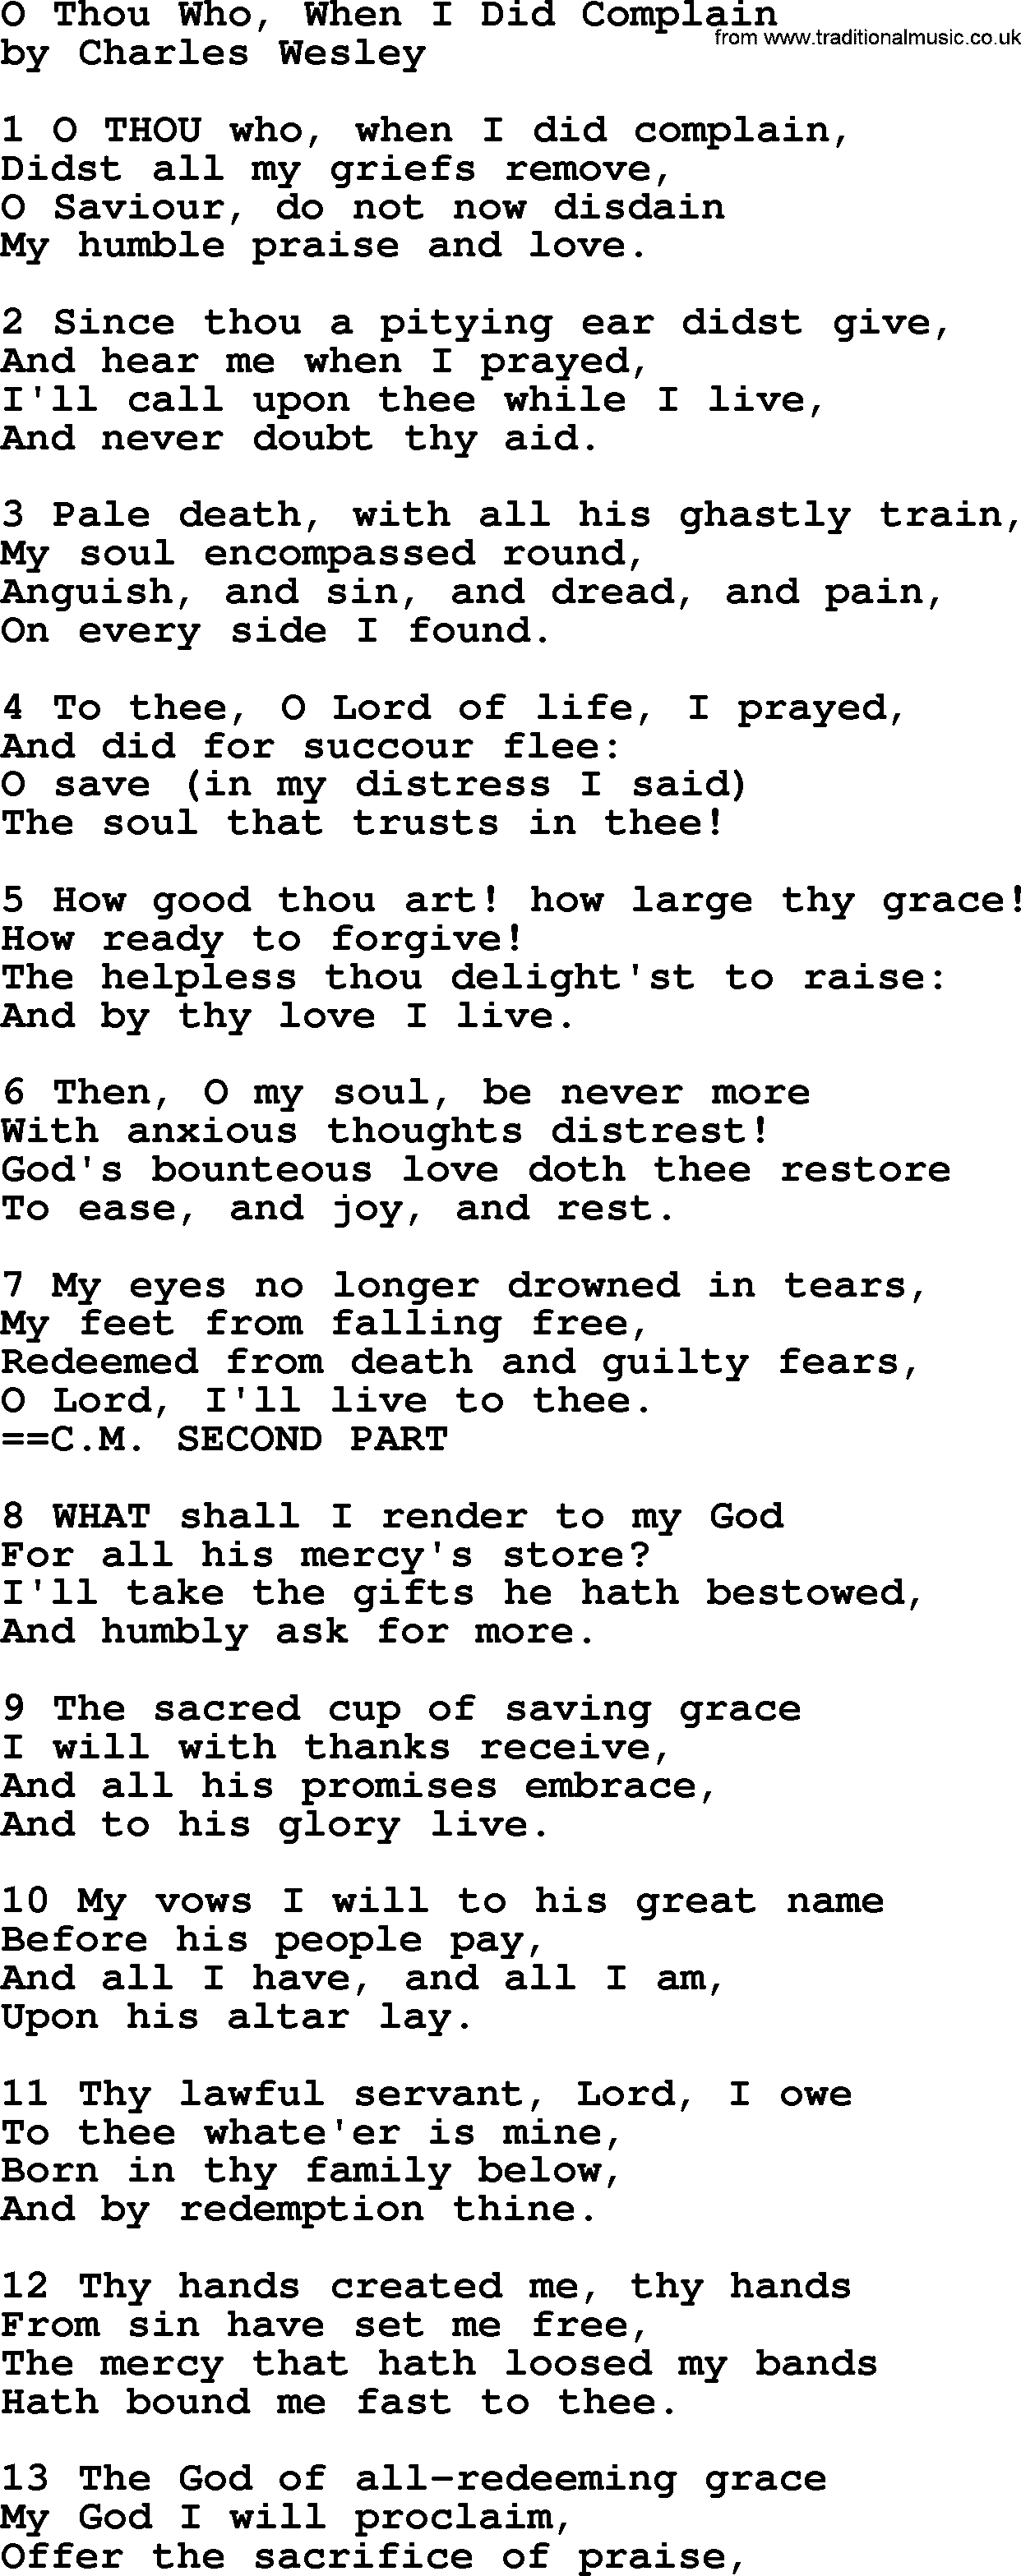 Charles Wesley hymn: O Thou Who, When I Did Complain, lyrics